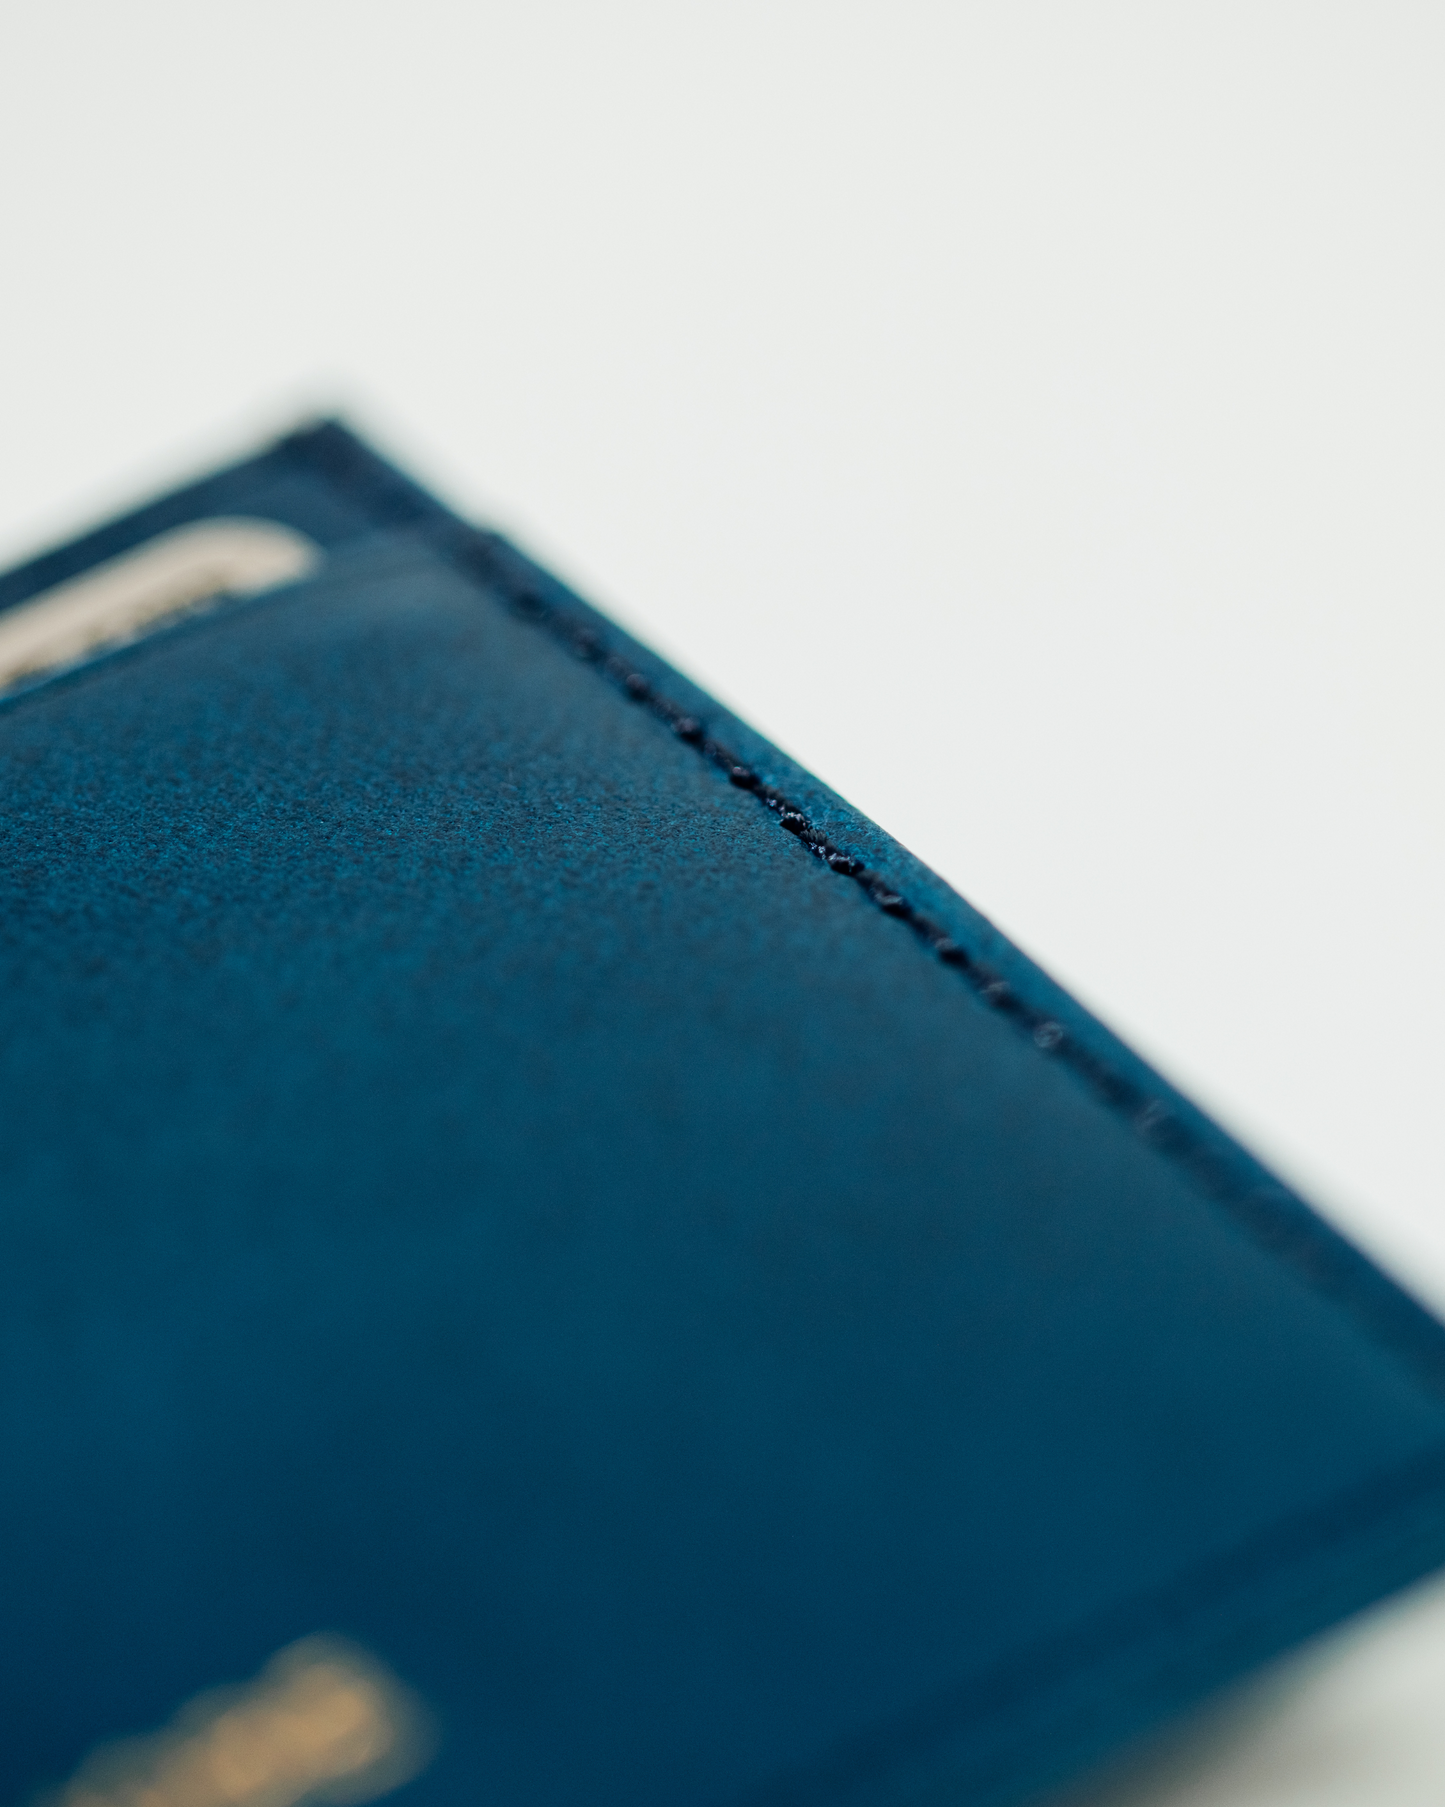 Essential Card Holder - Blue